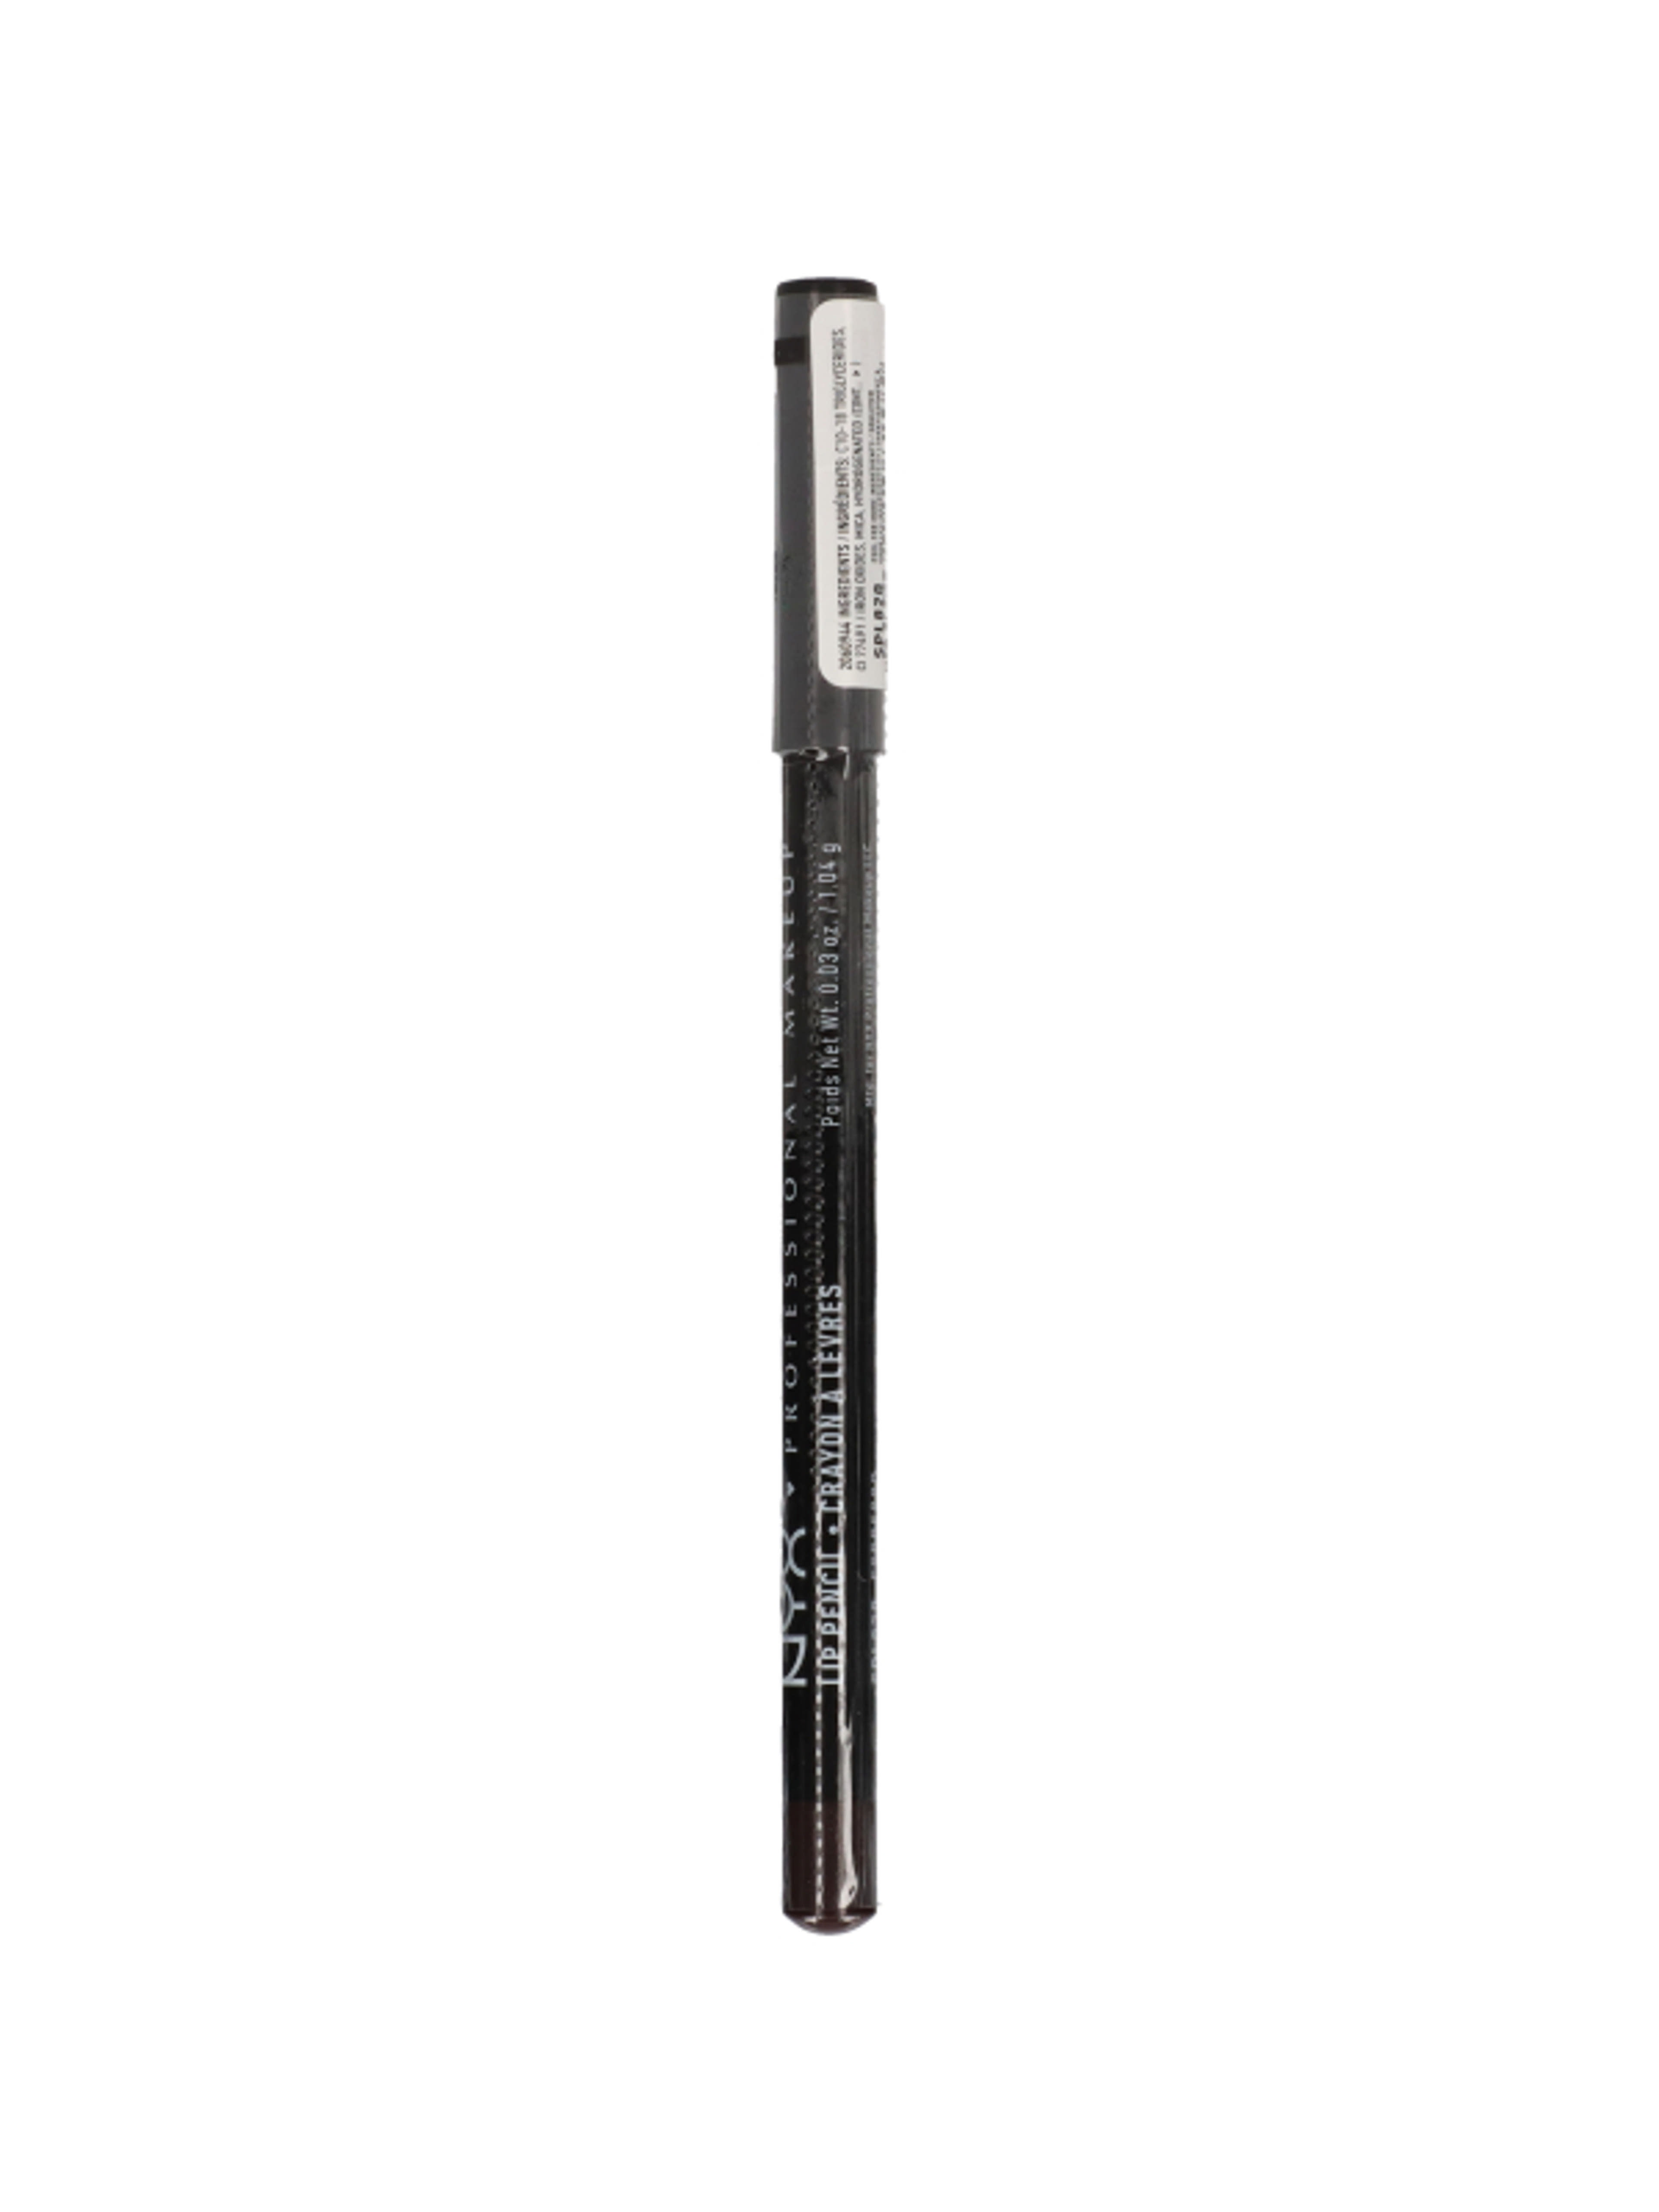 NYX Professional Makeup Slim Lip Pencil ajakkontúr ceruza, Espresso - 1 db-6